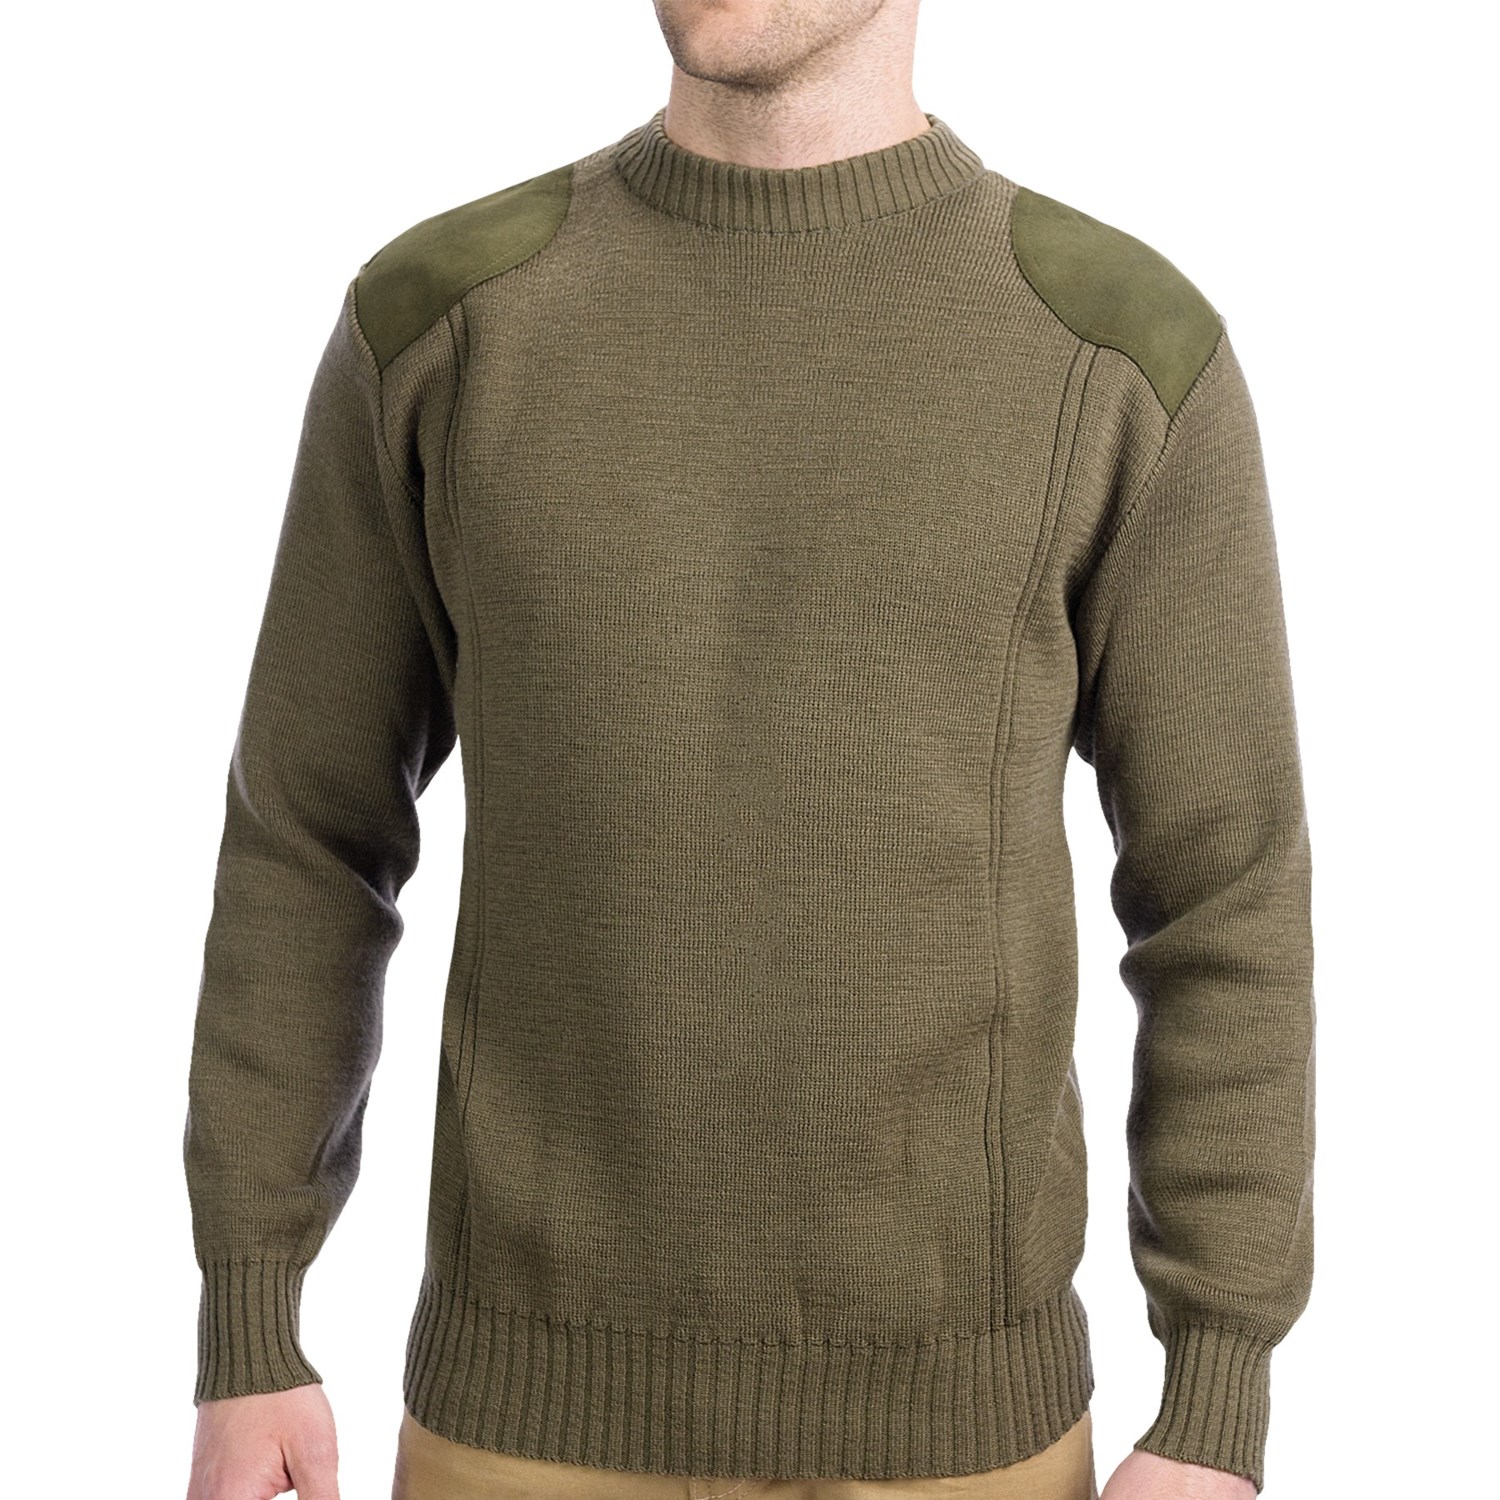 Boyt Harness Shooting Sweater (For Men) 2962V - Save 62%